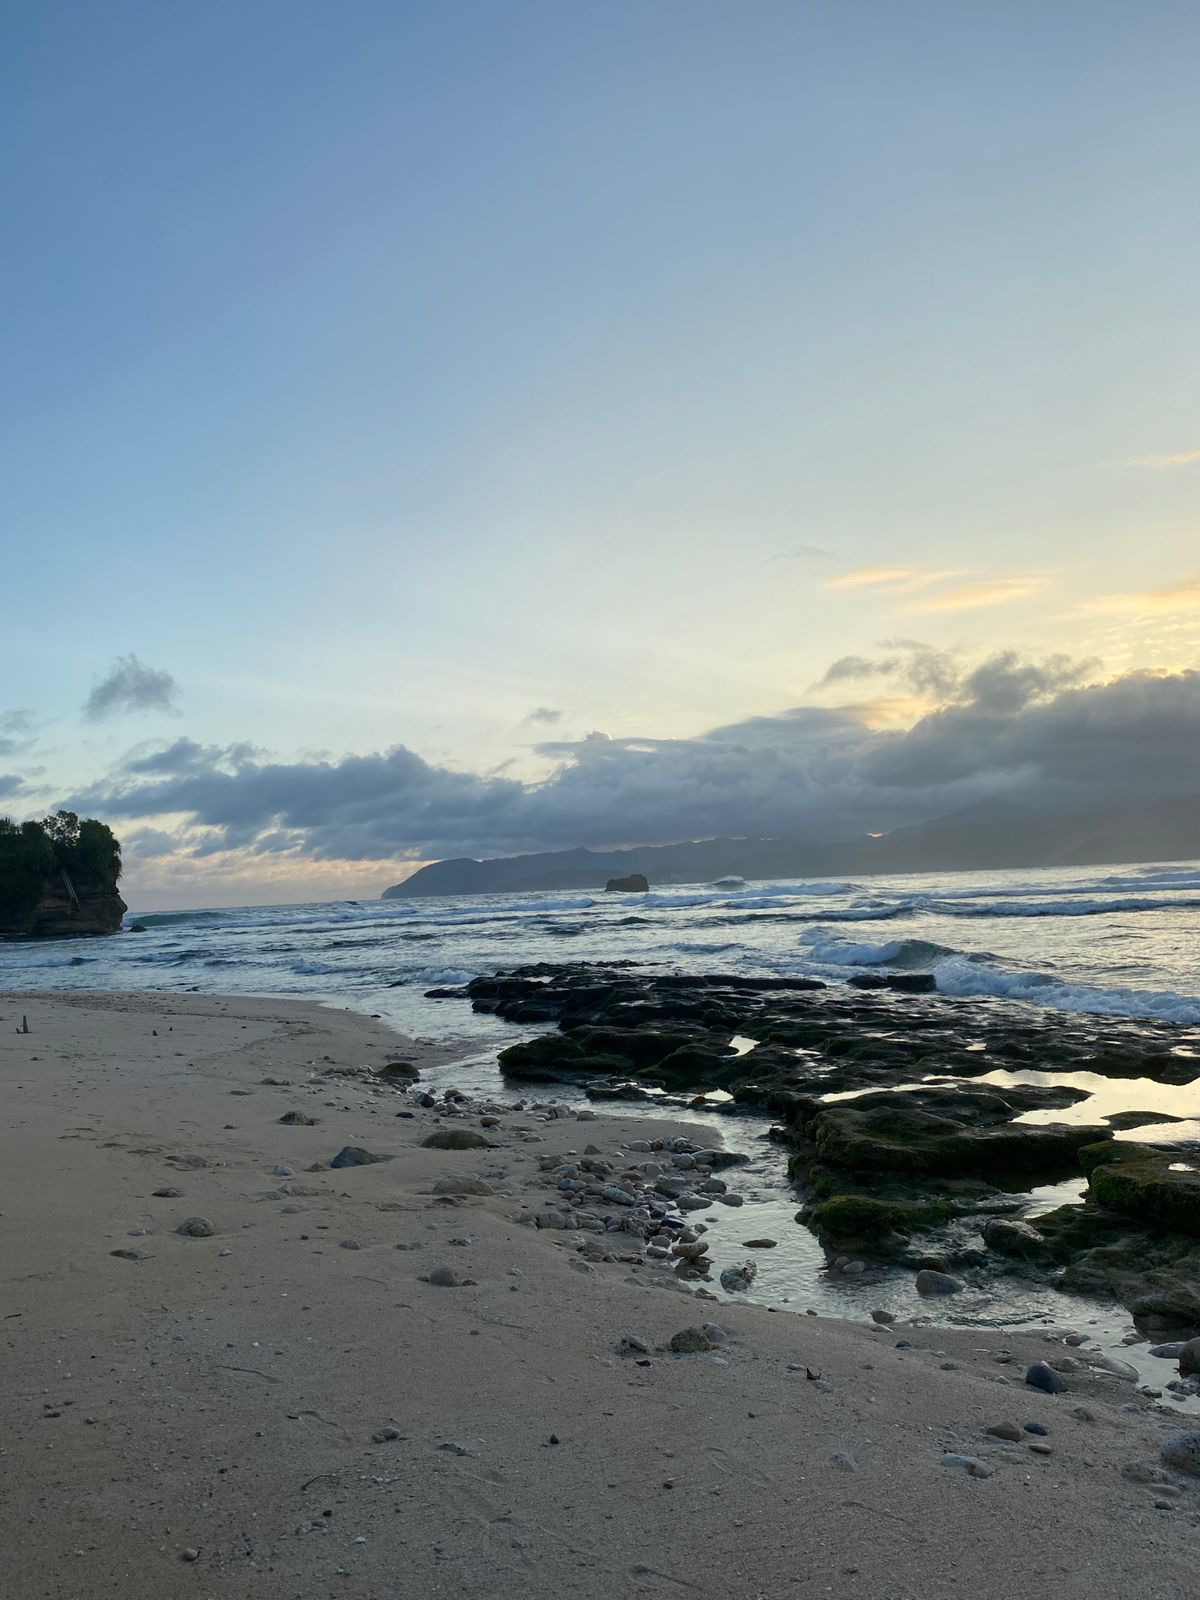 Pantai Siwil merupakan salah satu pantai hidden gem di Pacitan, Jawa Timur